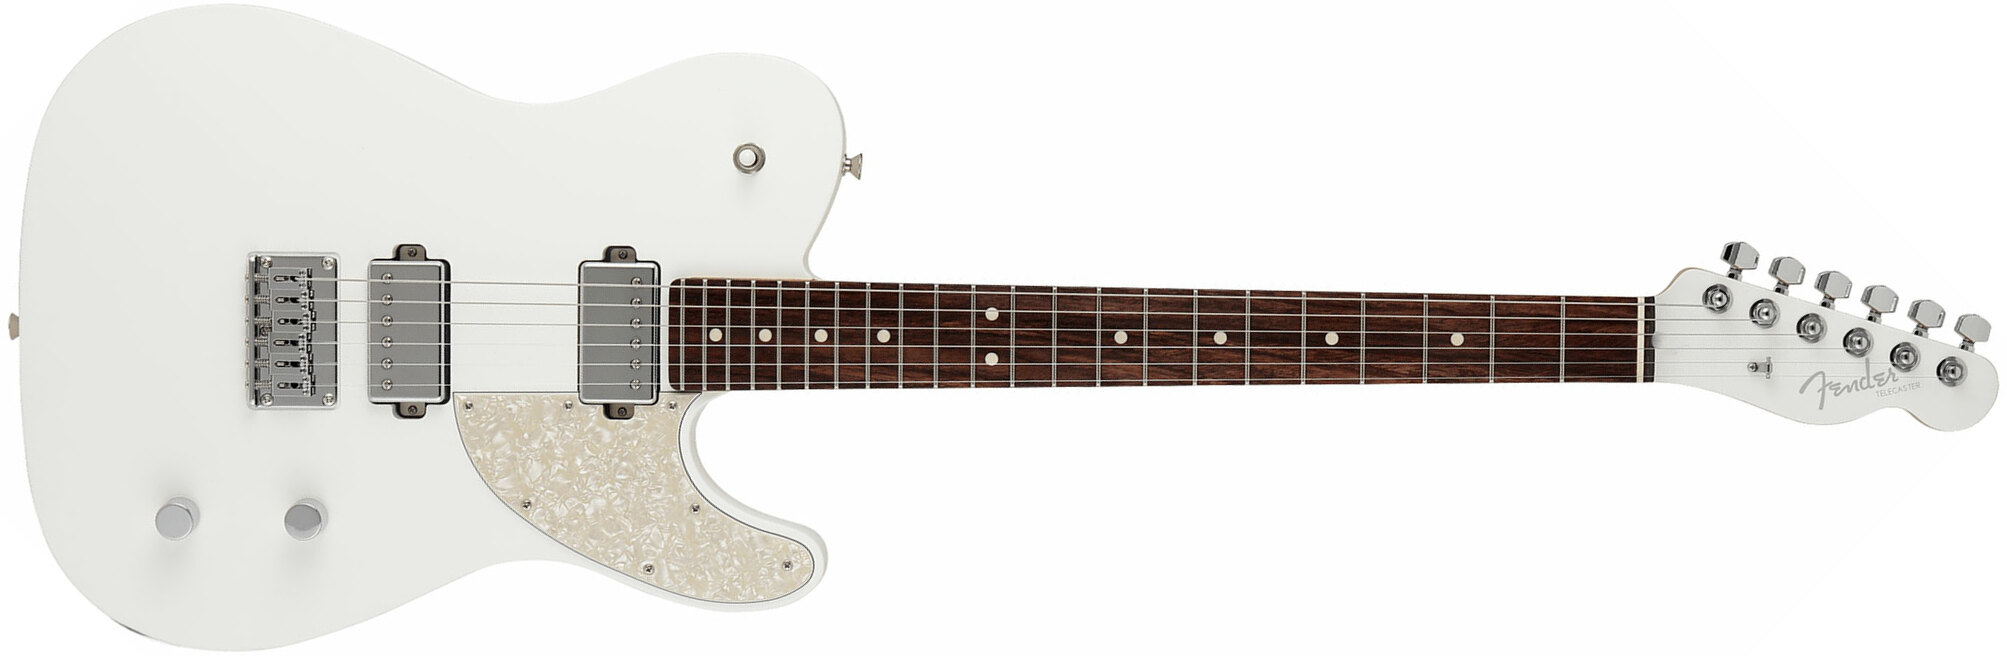 Fender Tele Elemental Mij Jap 2h Ht Rw - Nimbus White - Guitarra eléctrica con forma de tel - Main picture